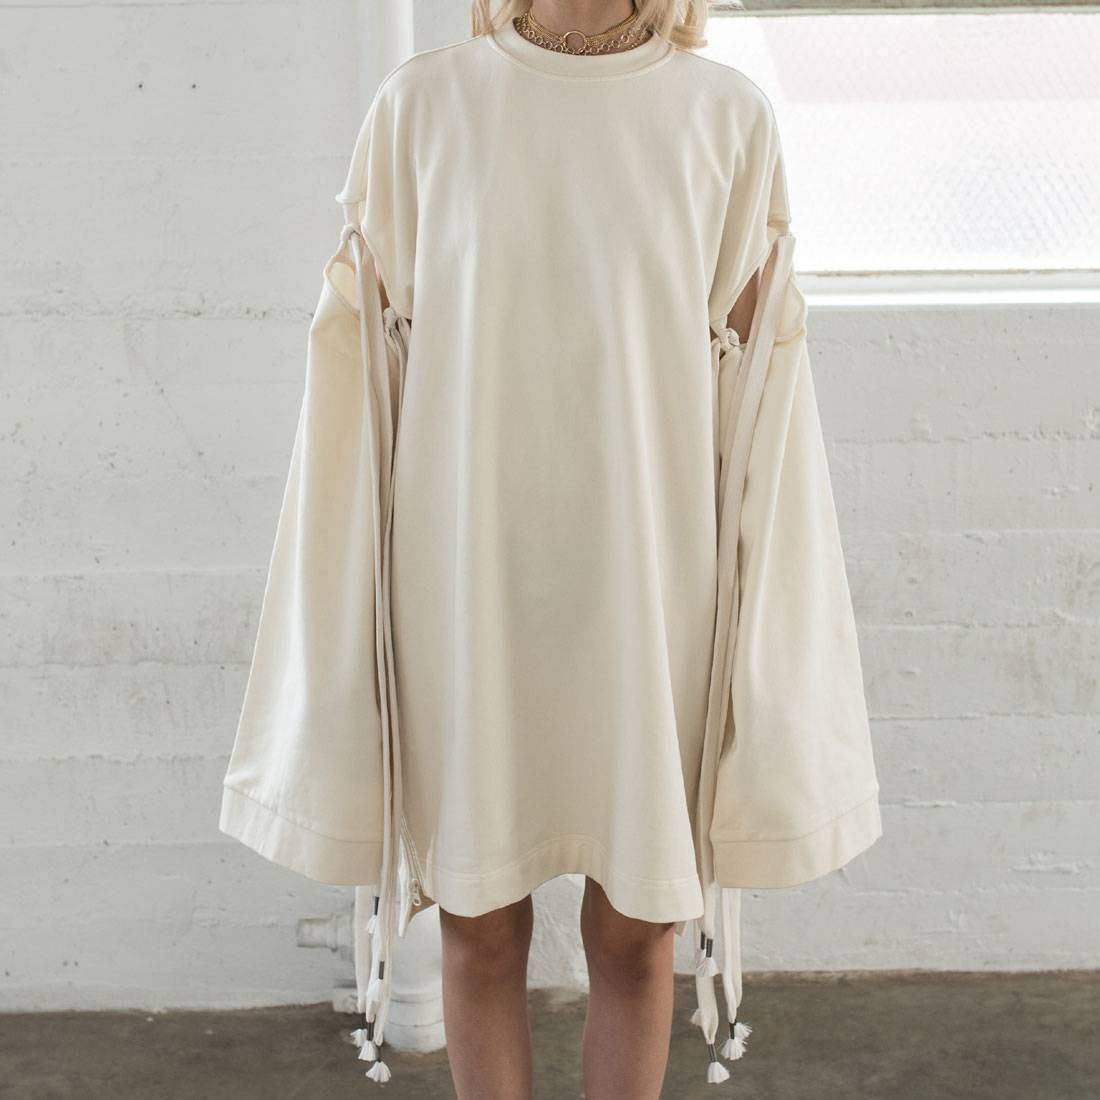 white puma dress